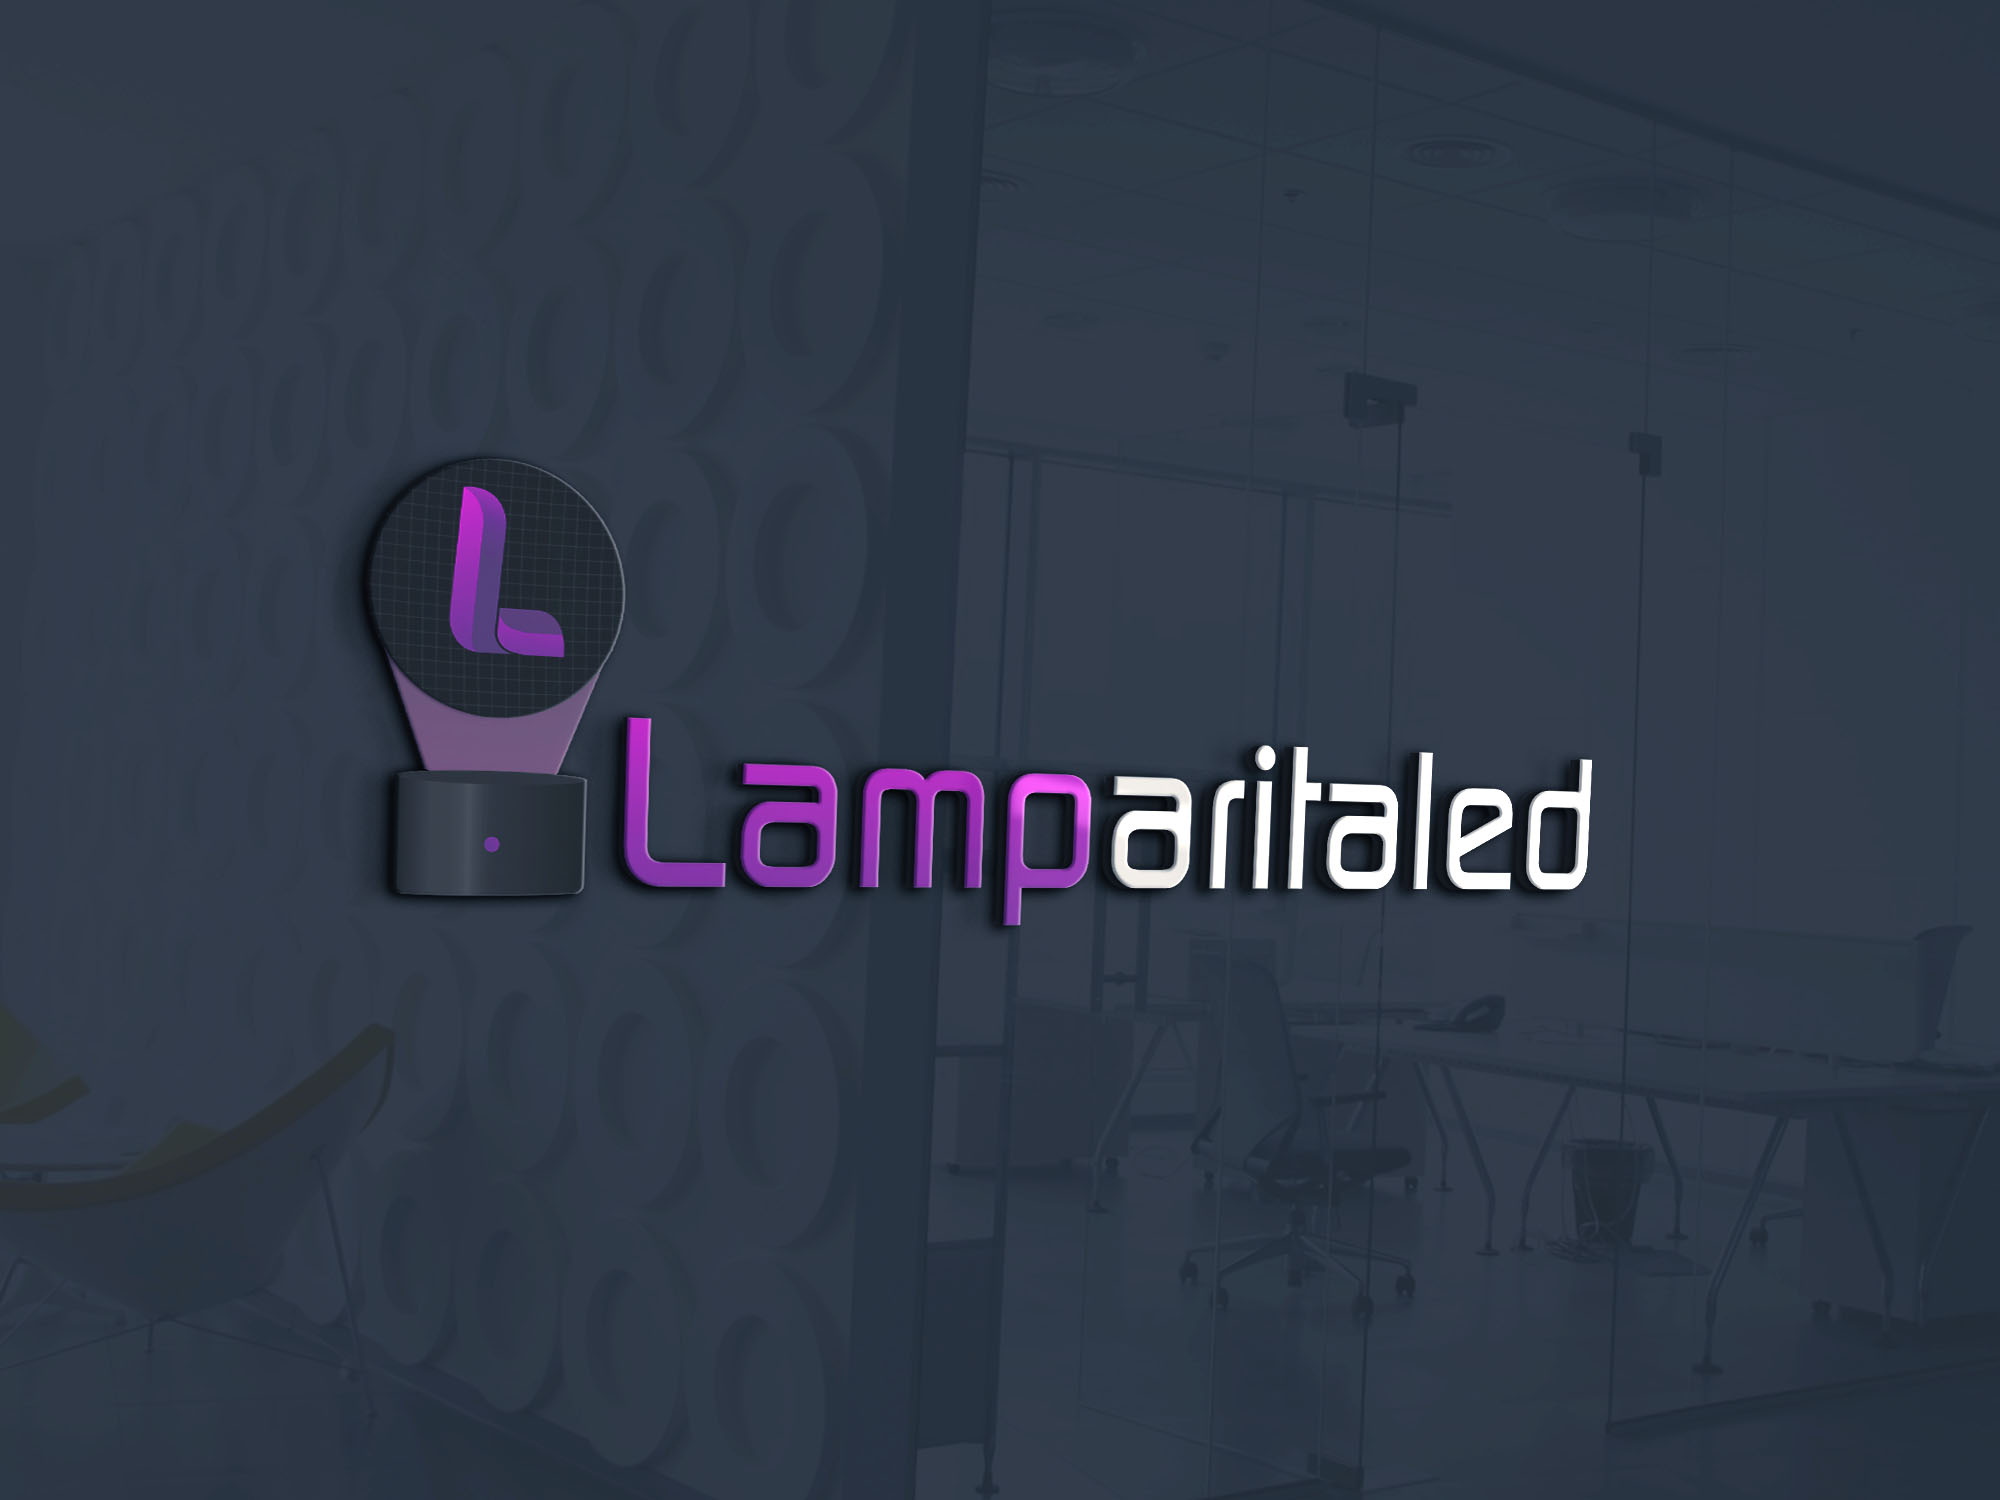 Instalaciones Lamparitaled.com